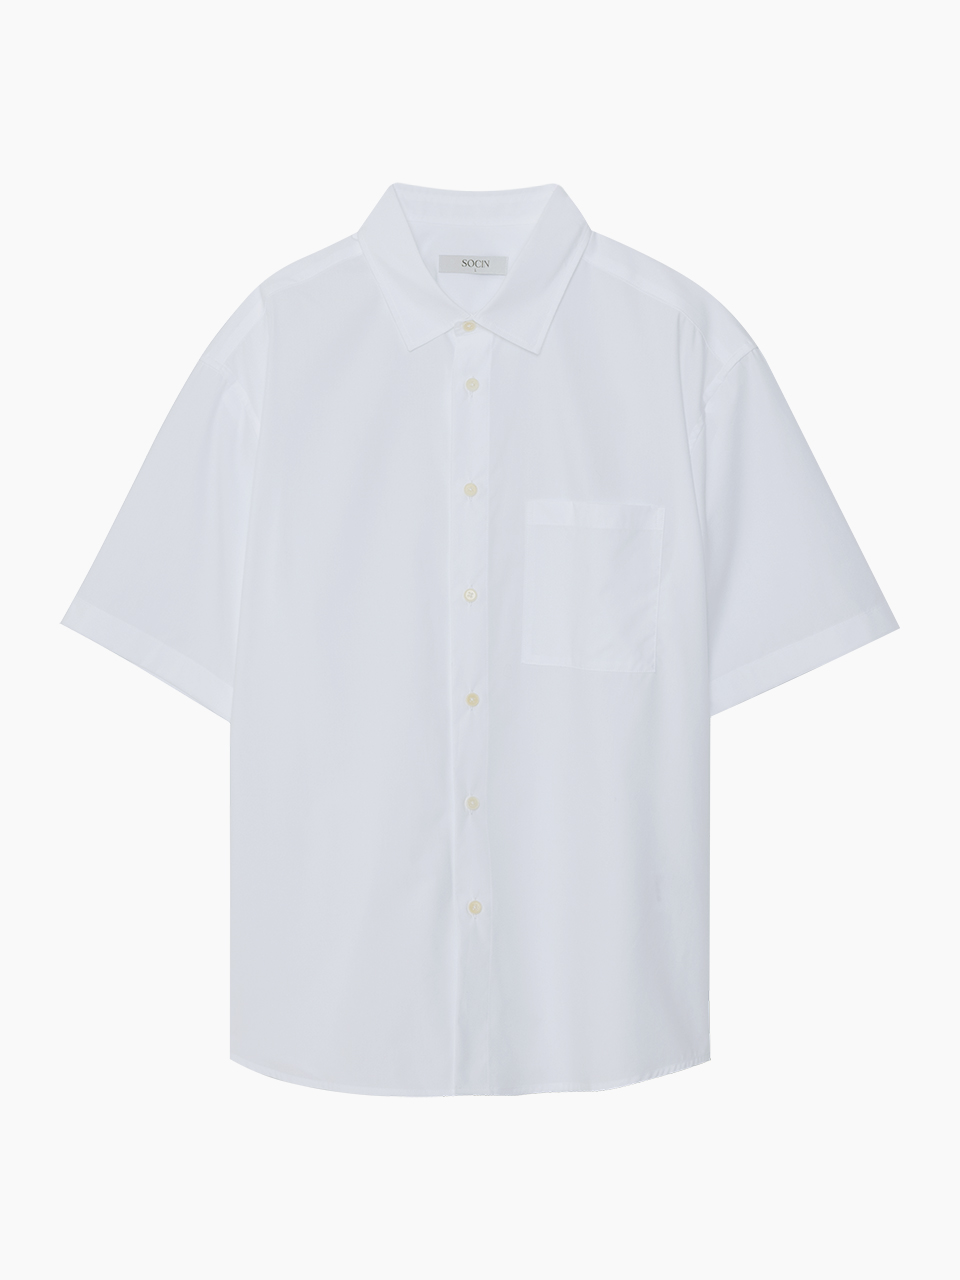 Premium Cotton urban half shirt (White)